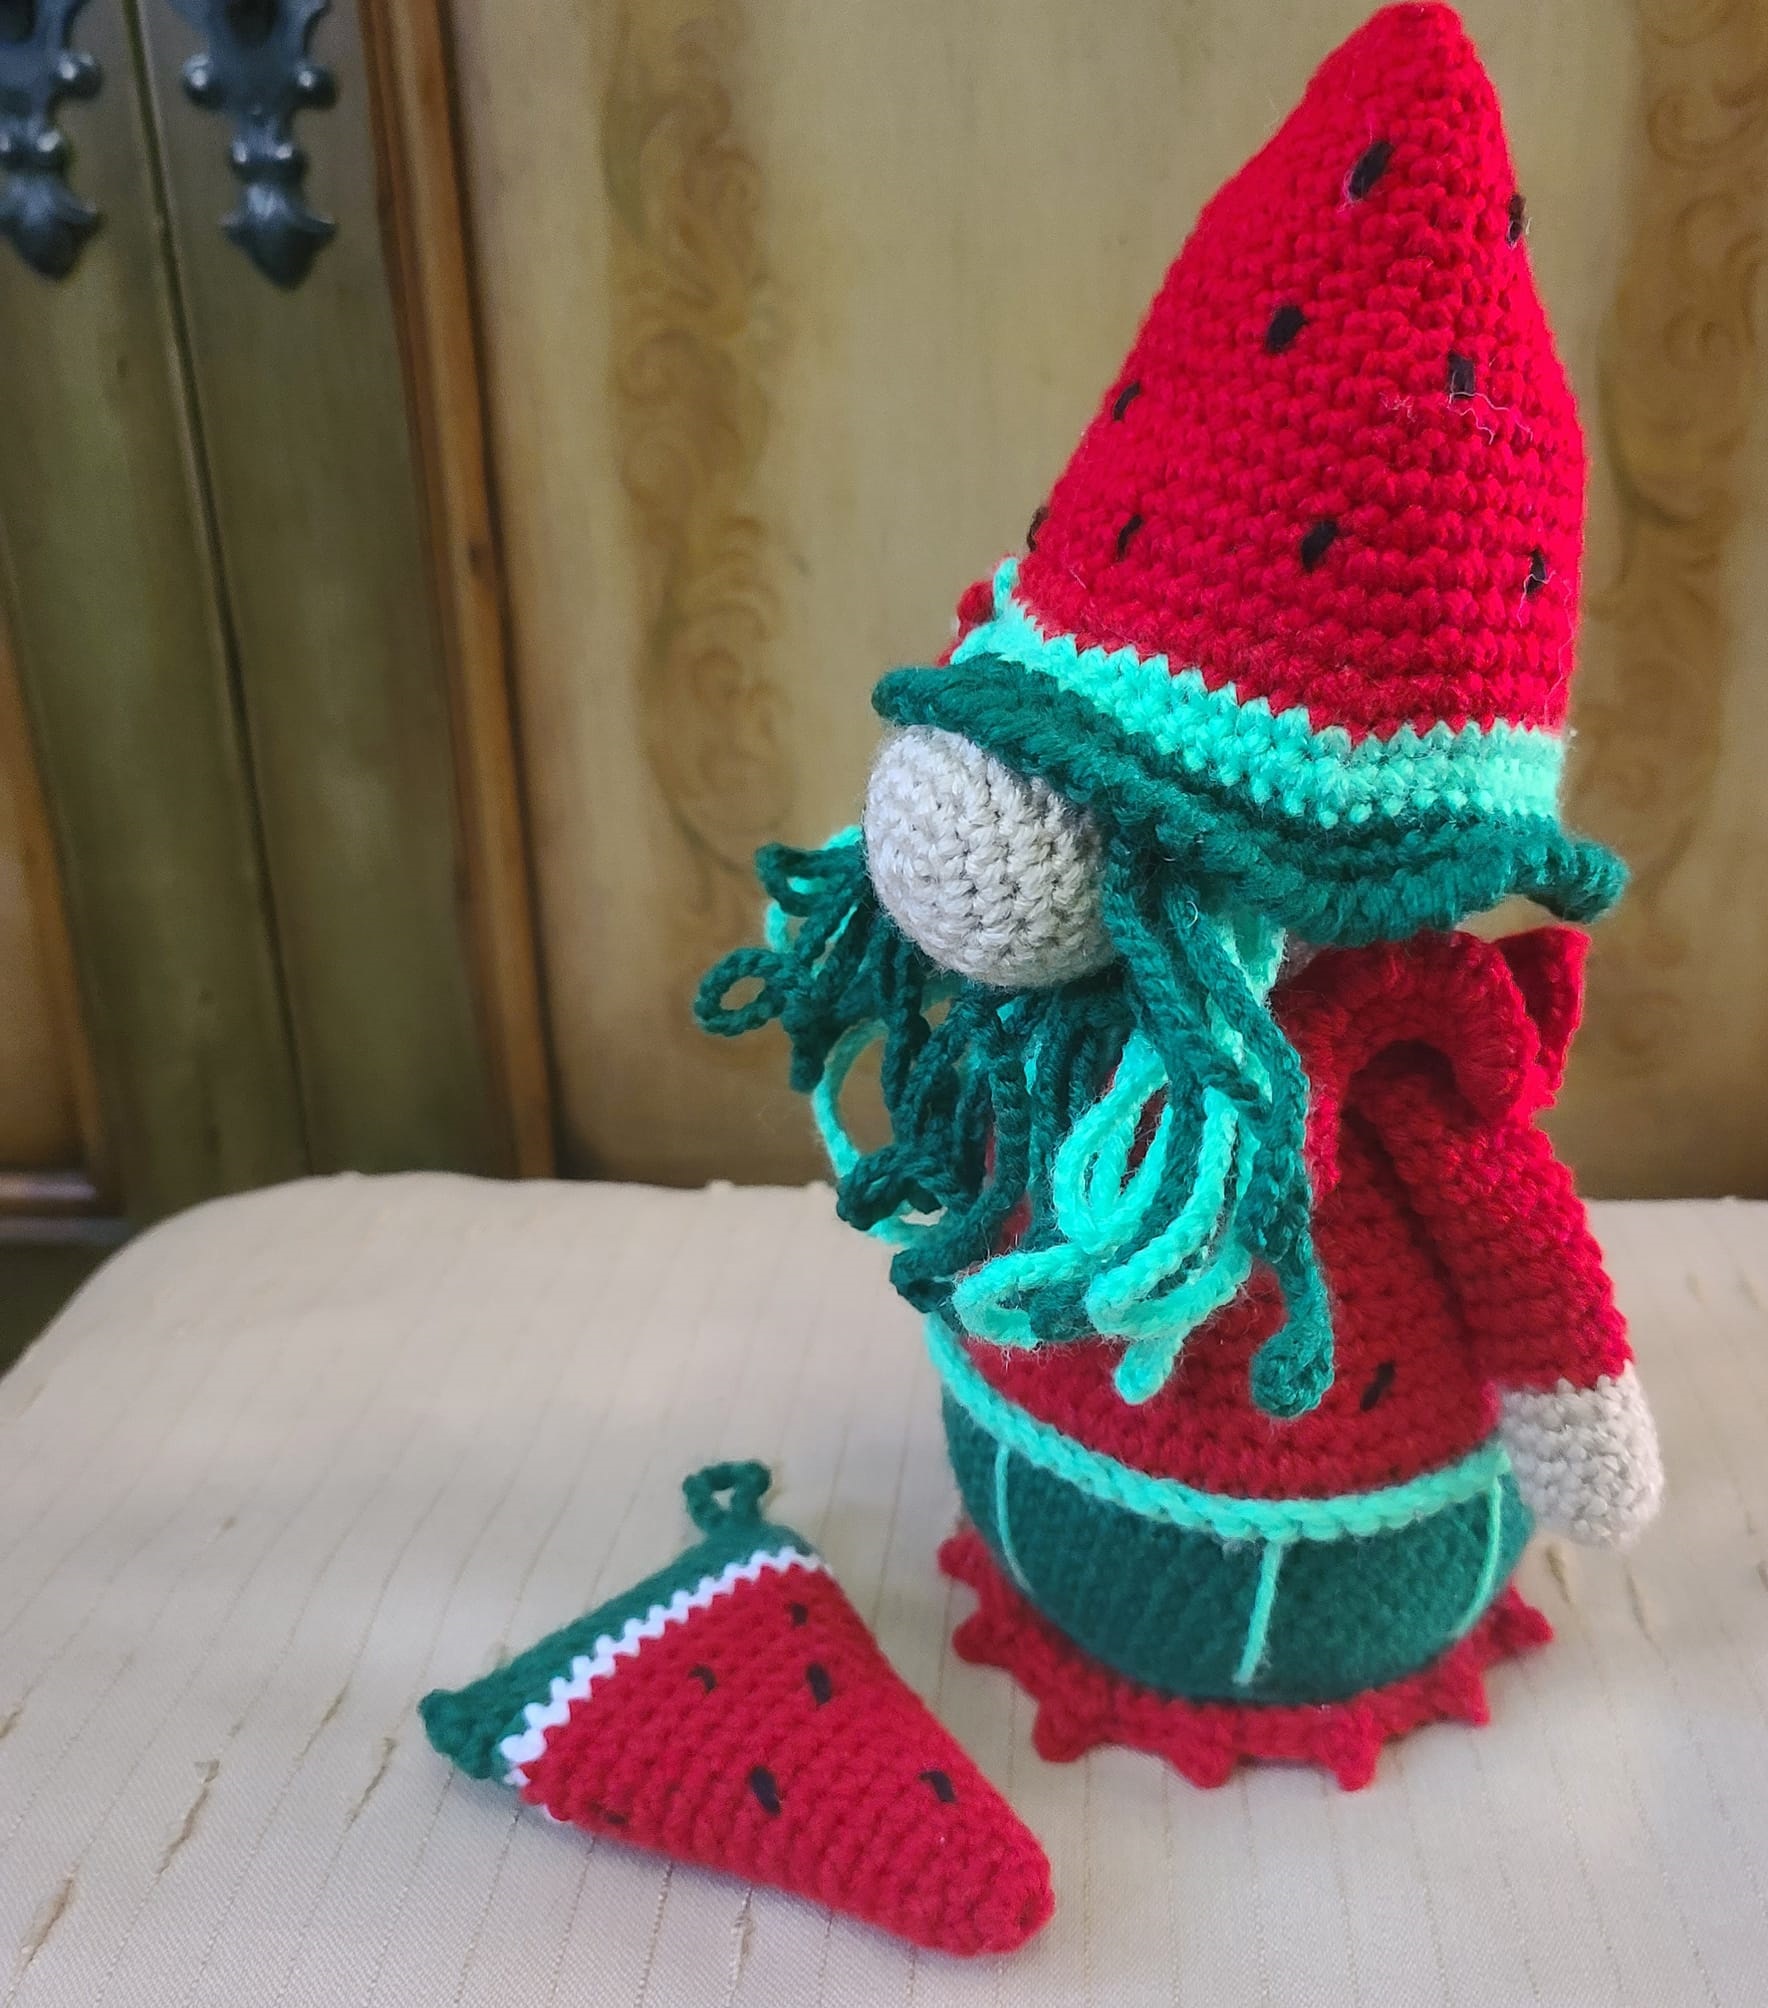 Handmade Crochet Watermelon Gnome, with Pc of watermelon